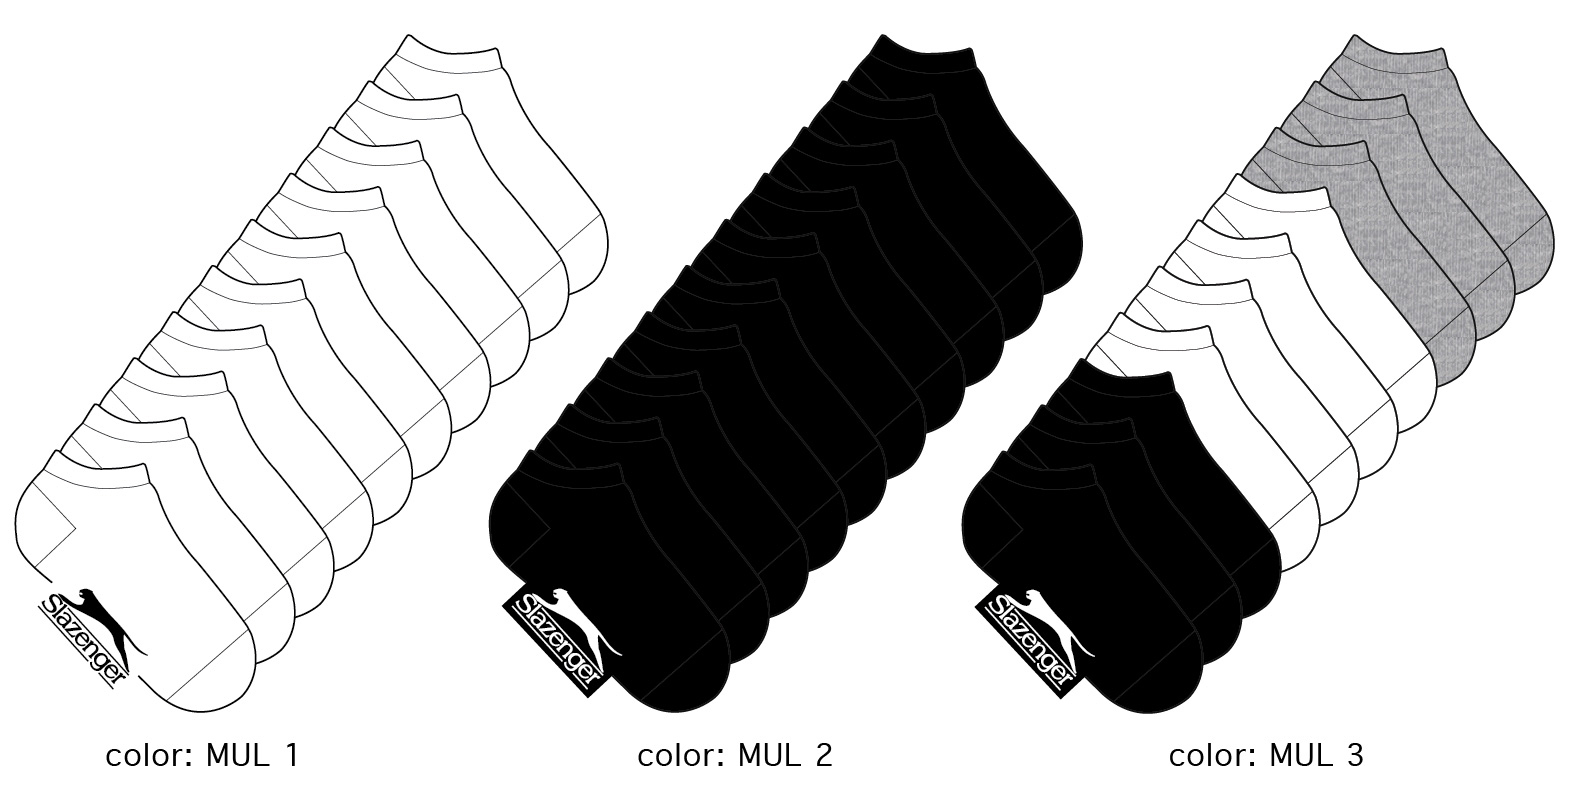 Slazenger Women's Low Cut Socks - Solid Colors - Size 9-11 - 10-Pair Packs